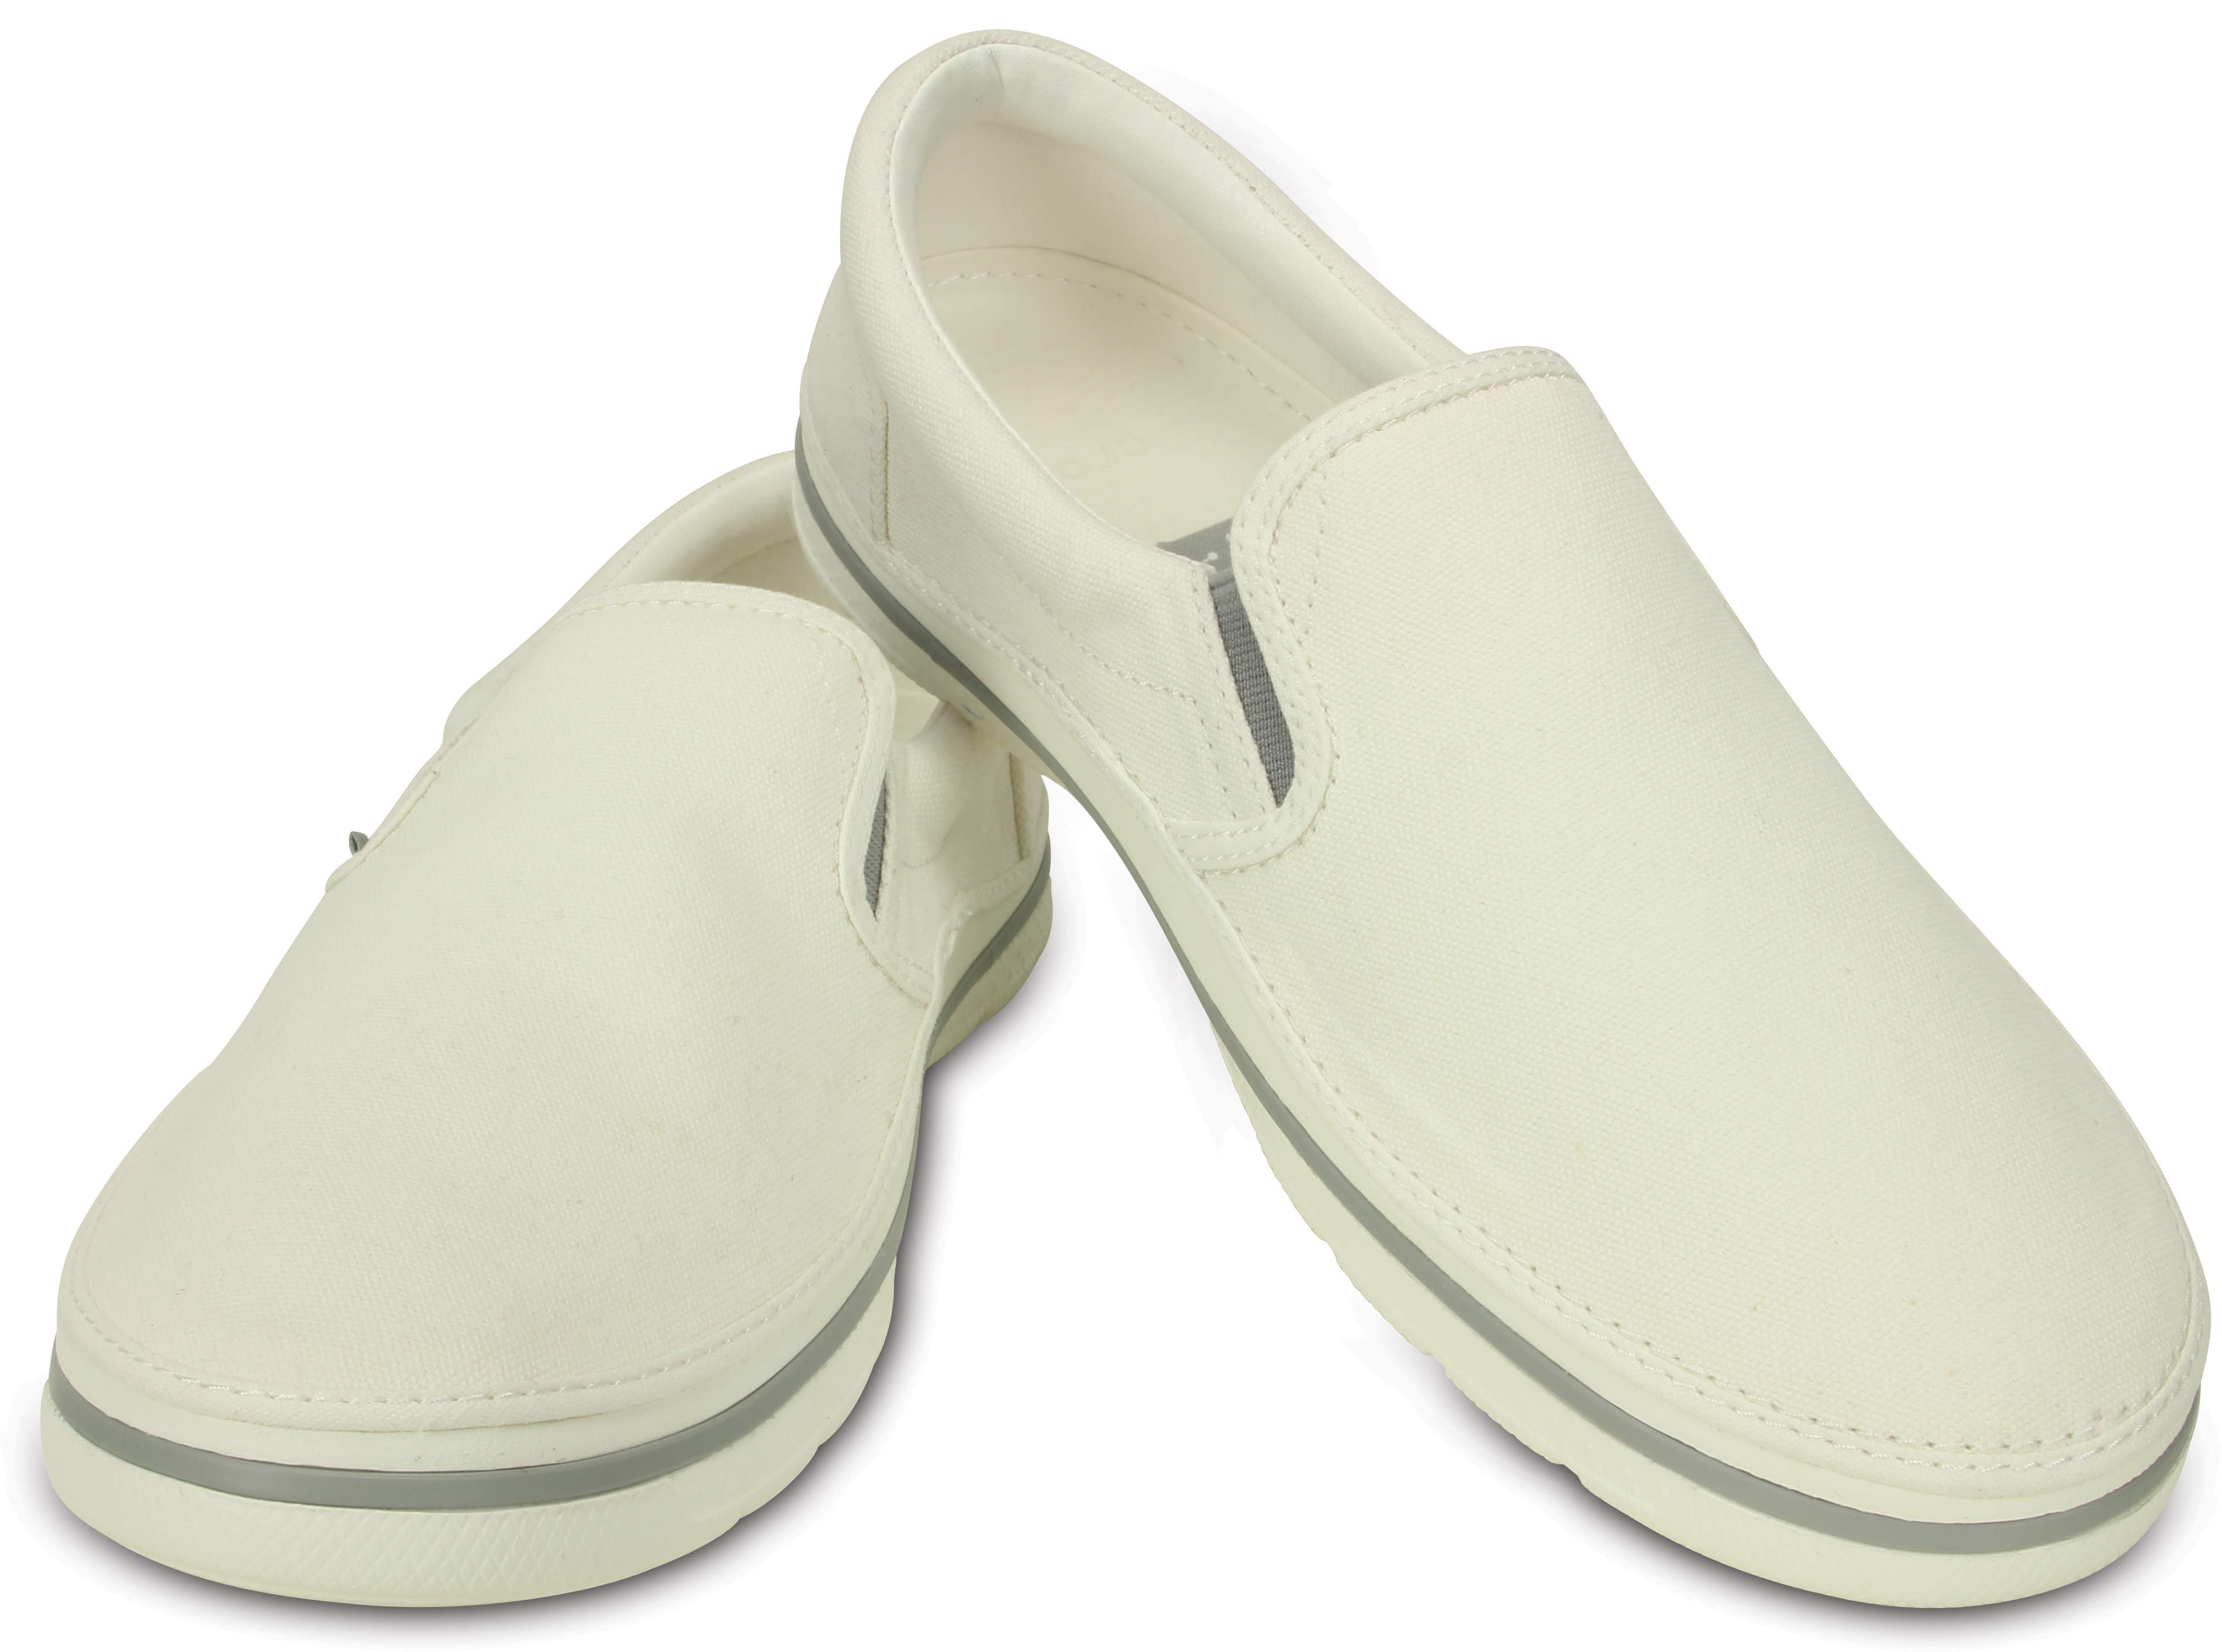 Crocs Men's Norlin Slip-on Shoe | eBay